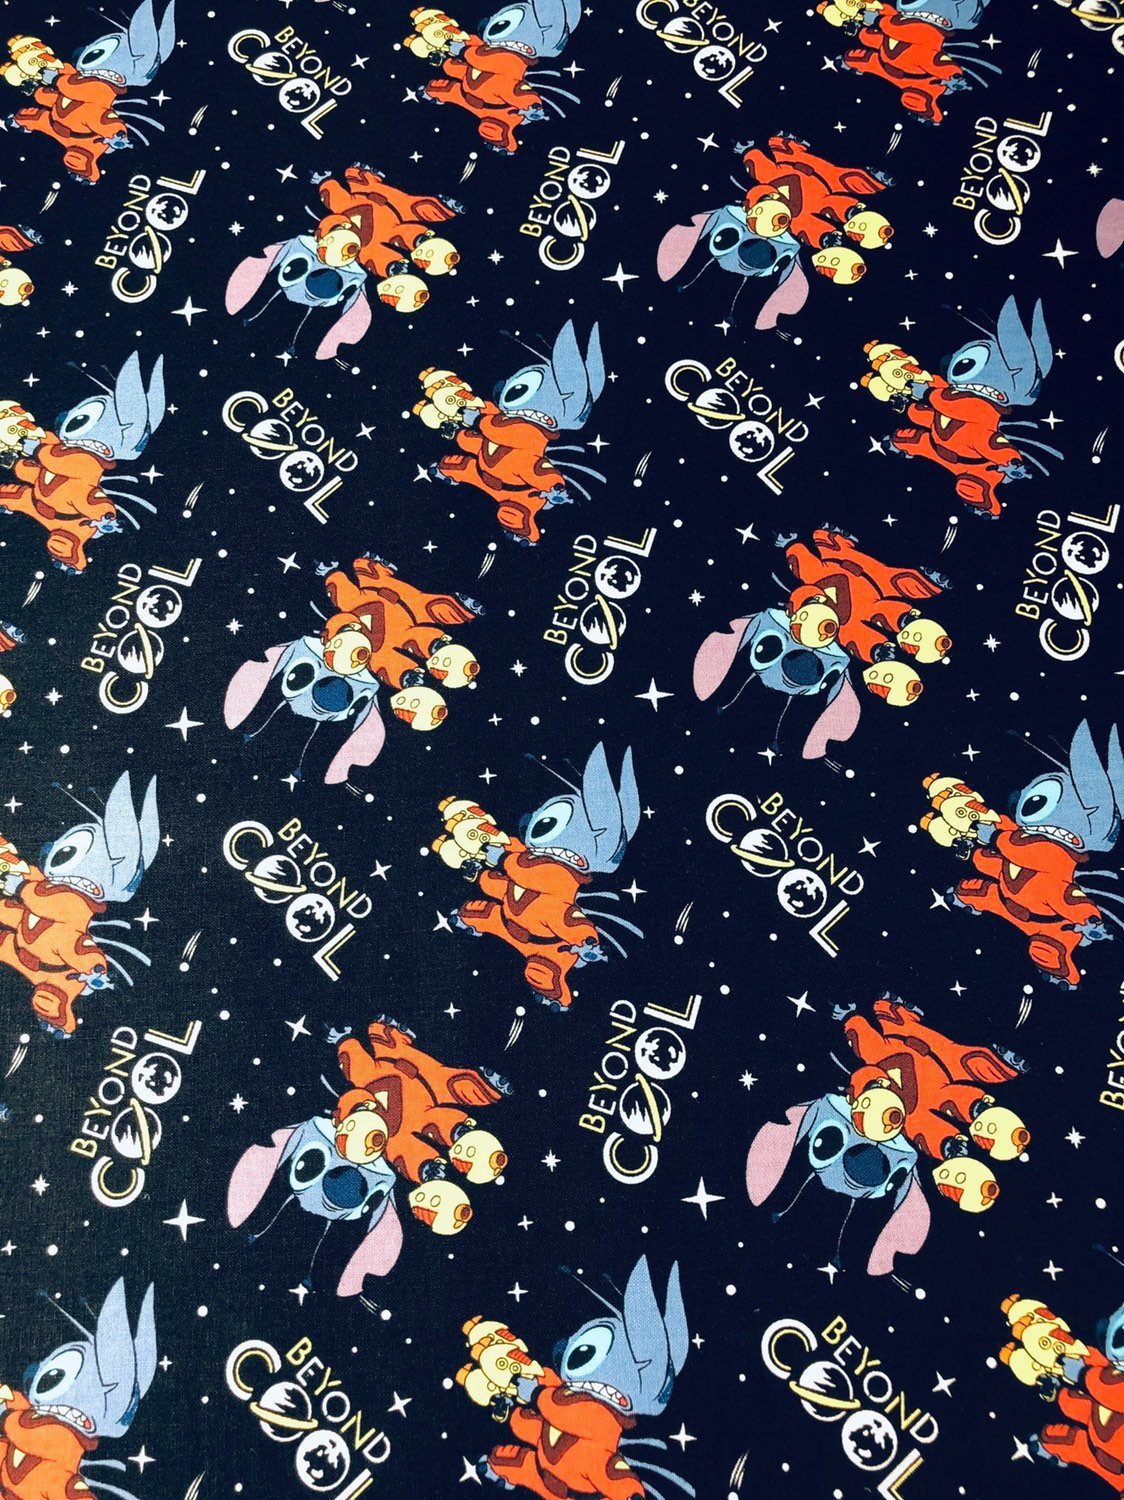 Disney Lilo and Stitch Fabric by the Yard - Fabric